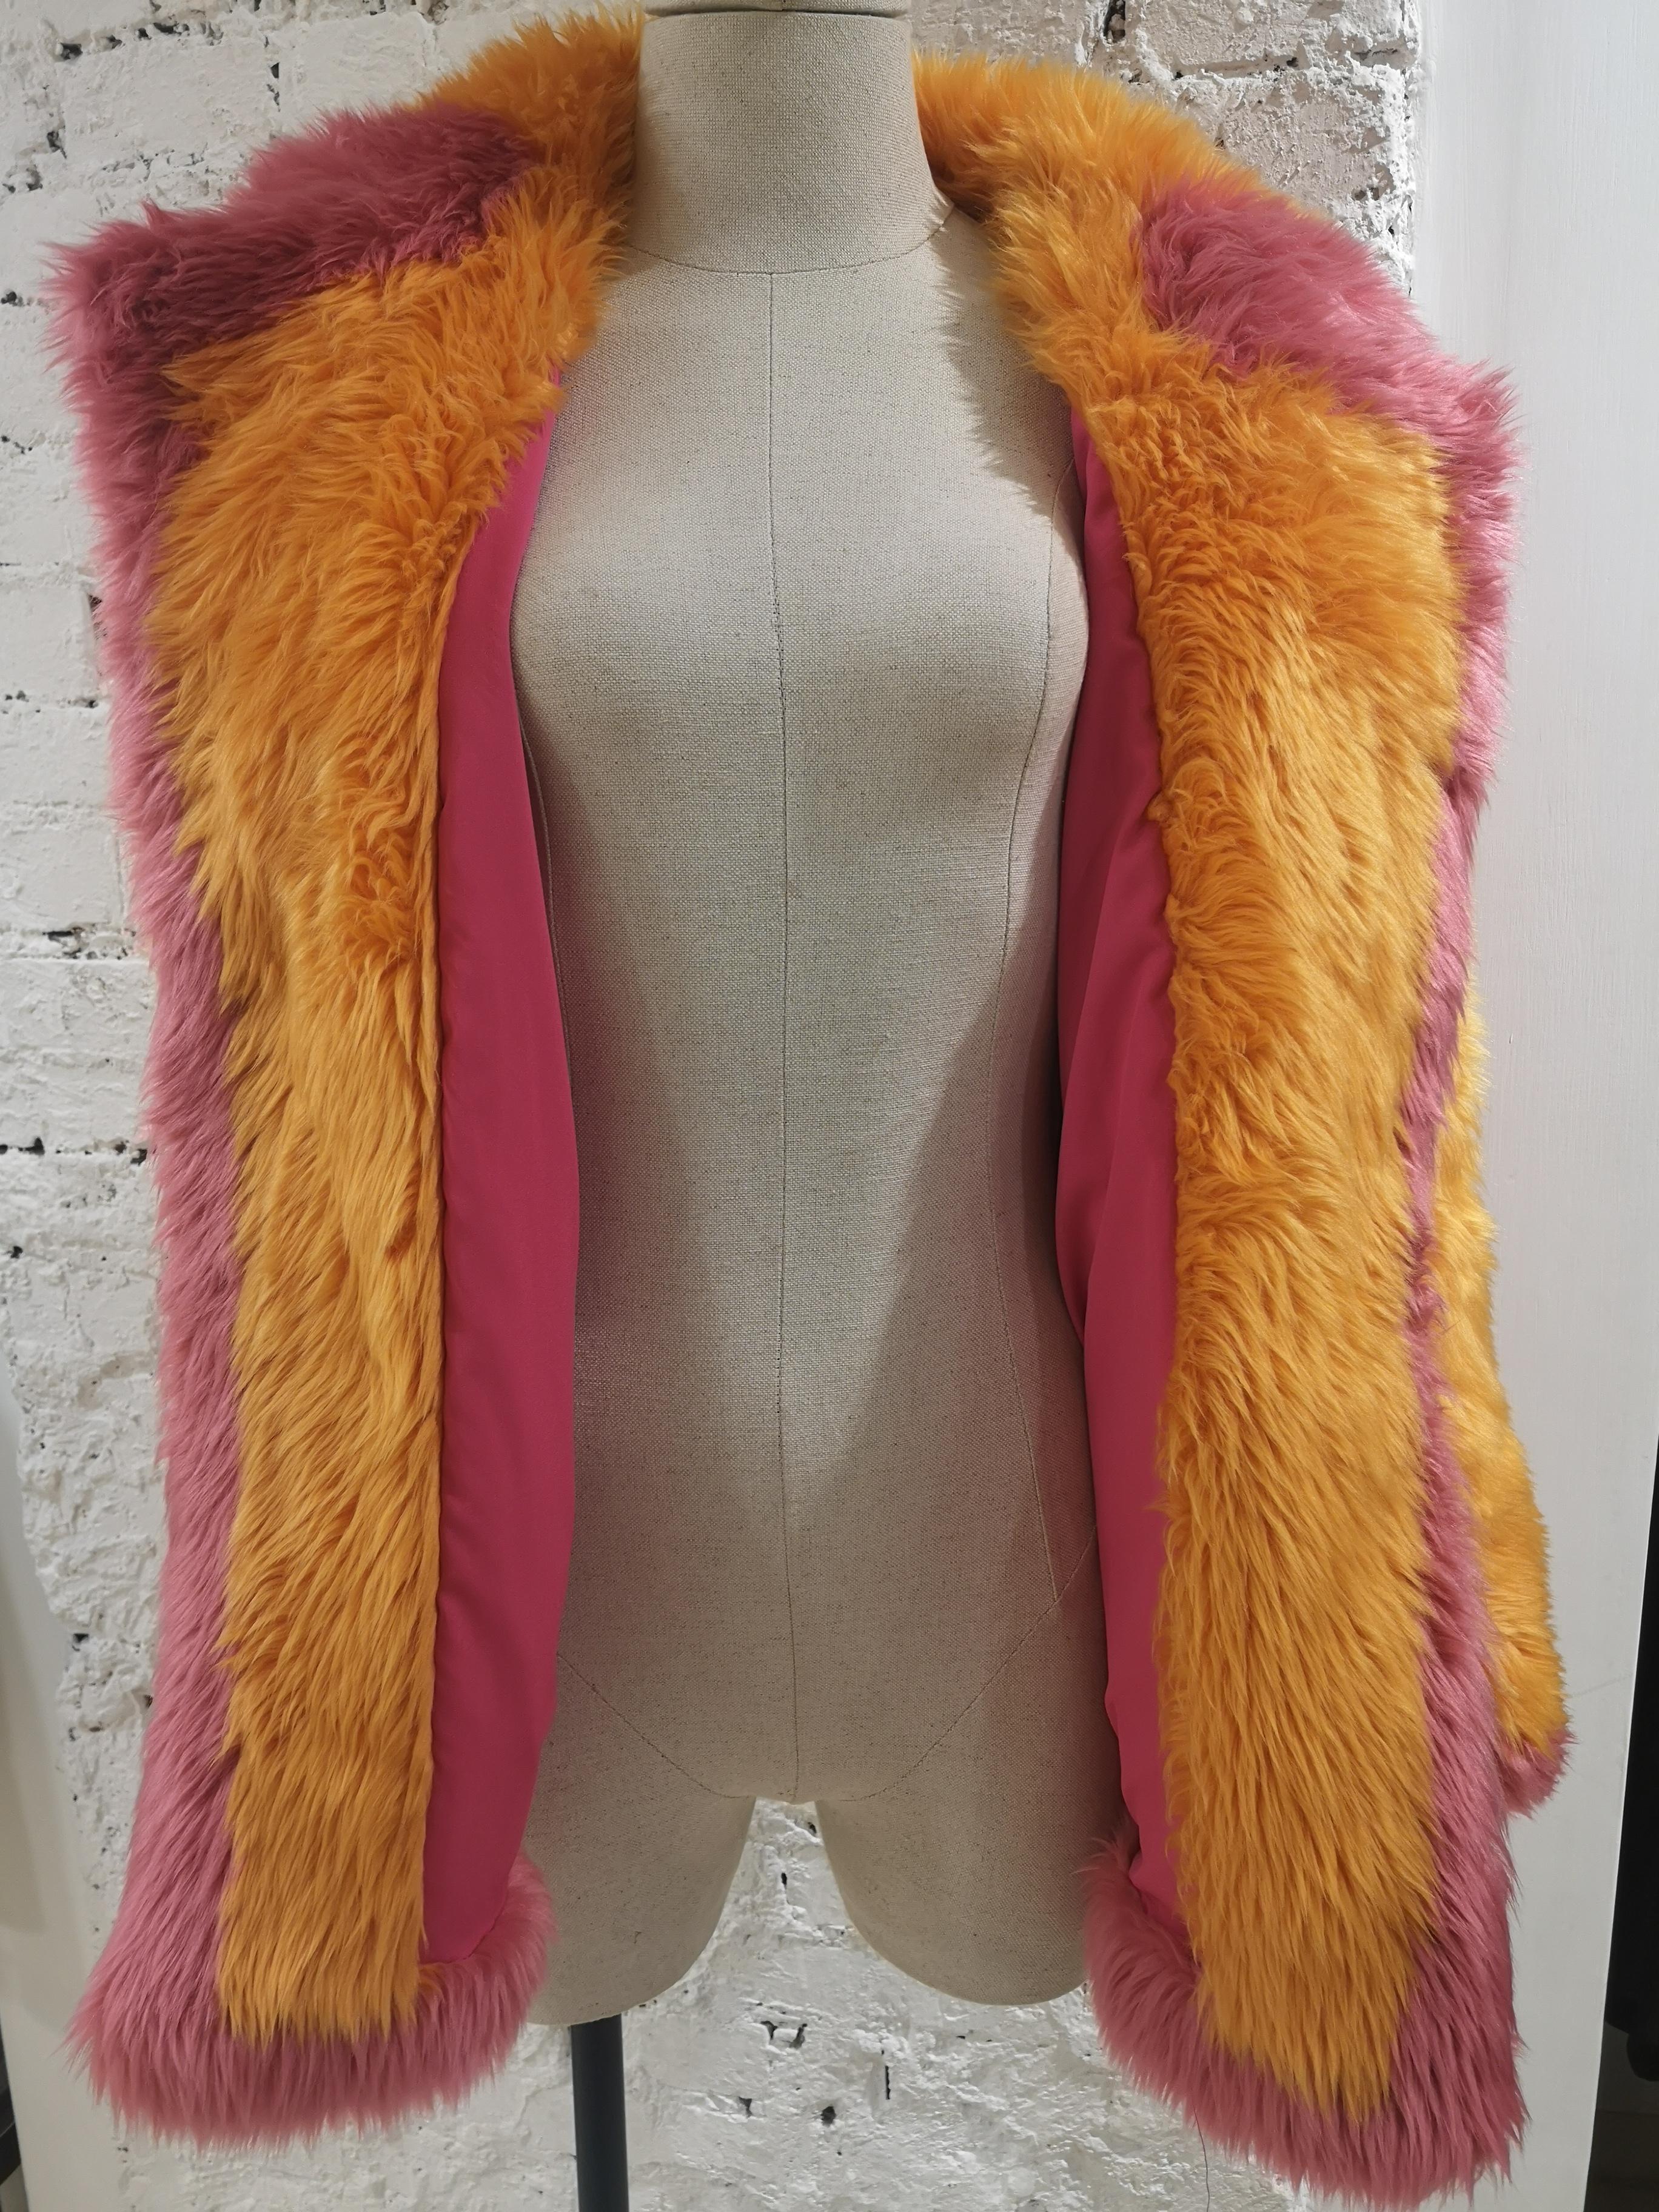 House of Muamua orange pink faux fur jacket NWOT
one the back a pink heart
size M 
total lenght 73 cm
shoulder to hem is 57 cm